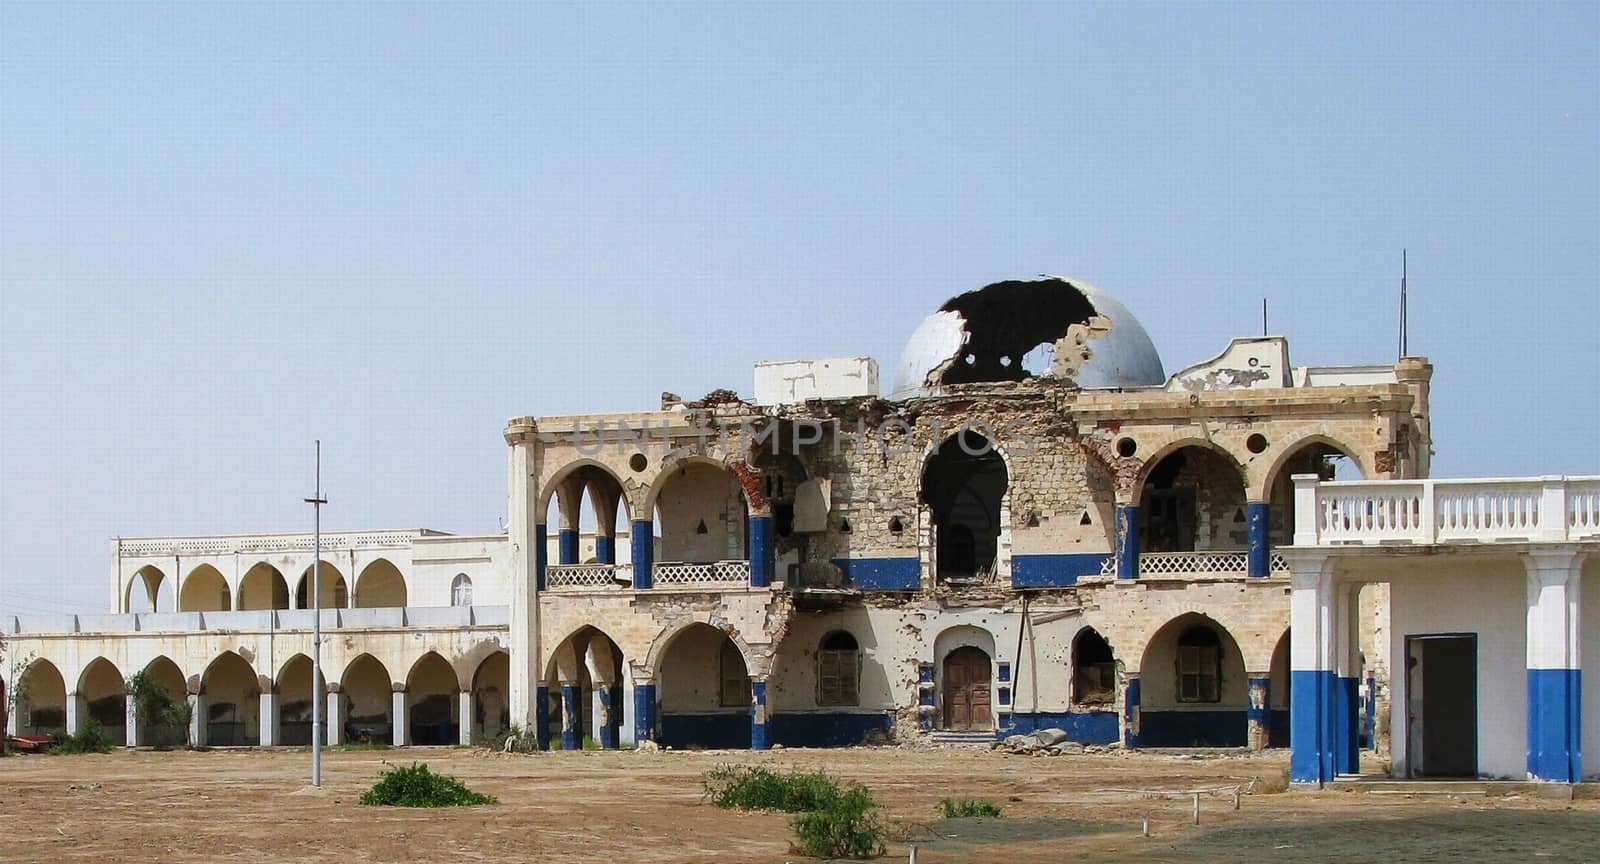 Ruins of former Haile Selassie residence in Massawa, Eritrea